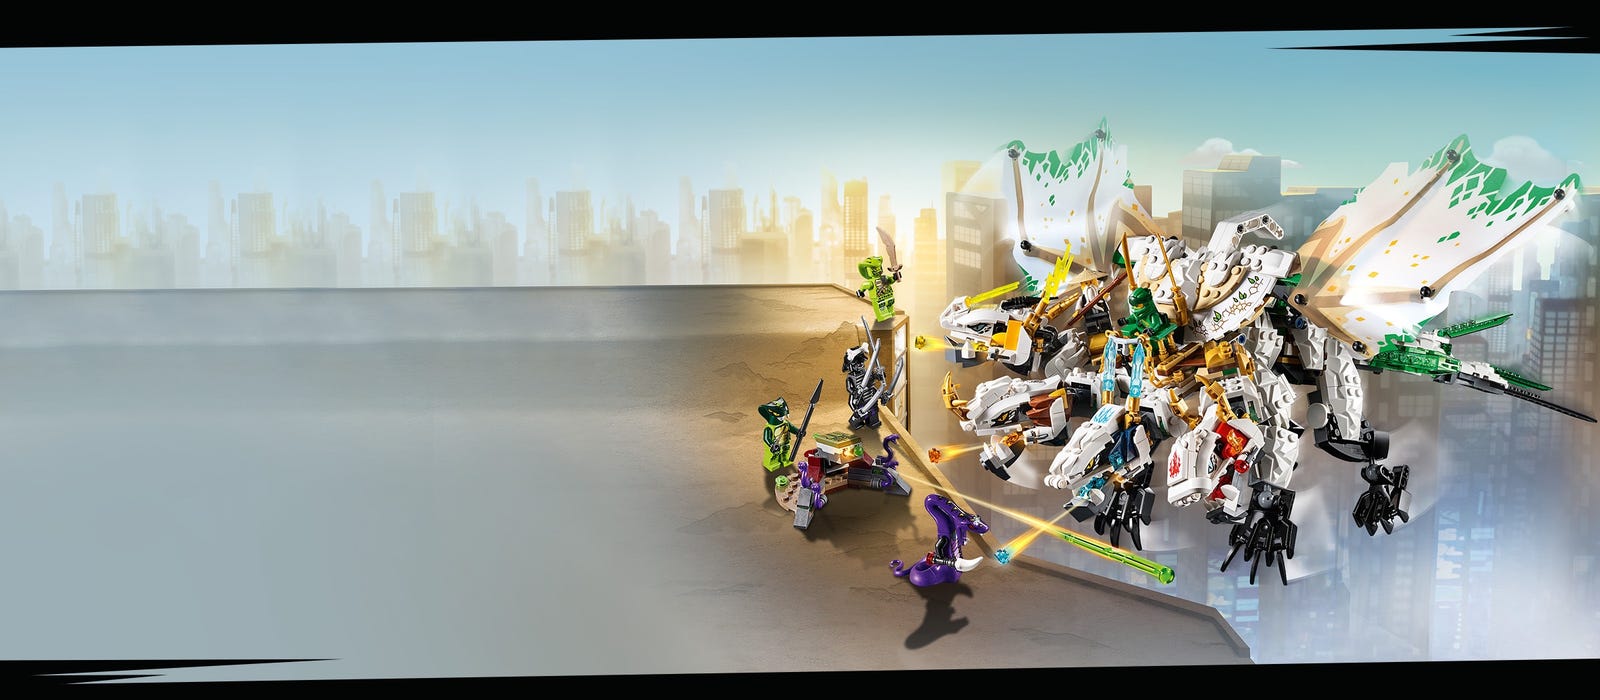 LEGO Ninjago: Lloyd Garmadon (Green Ninja) Minifigure with Shoulder Armor  and Two katanas (Swords)